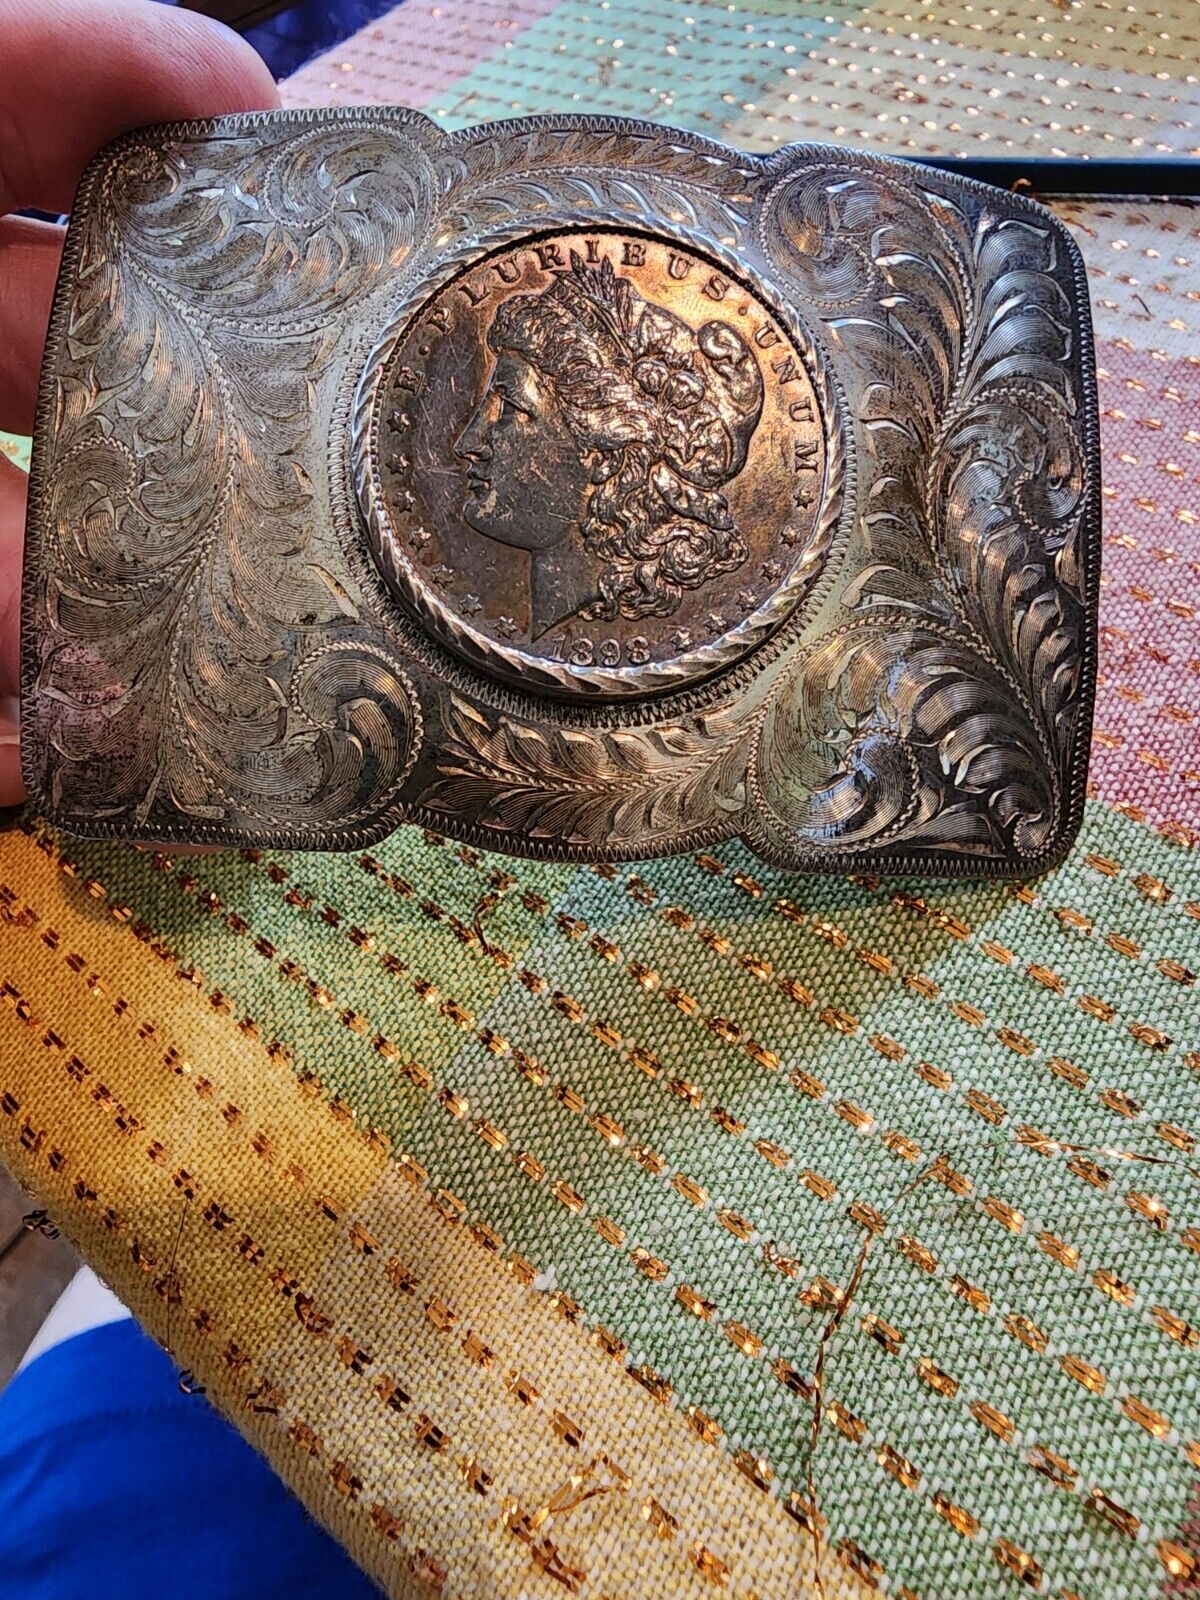 Trendline Sterling Belt Buckle 1898 Morgan Silver western cowboy Americana 100 g